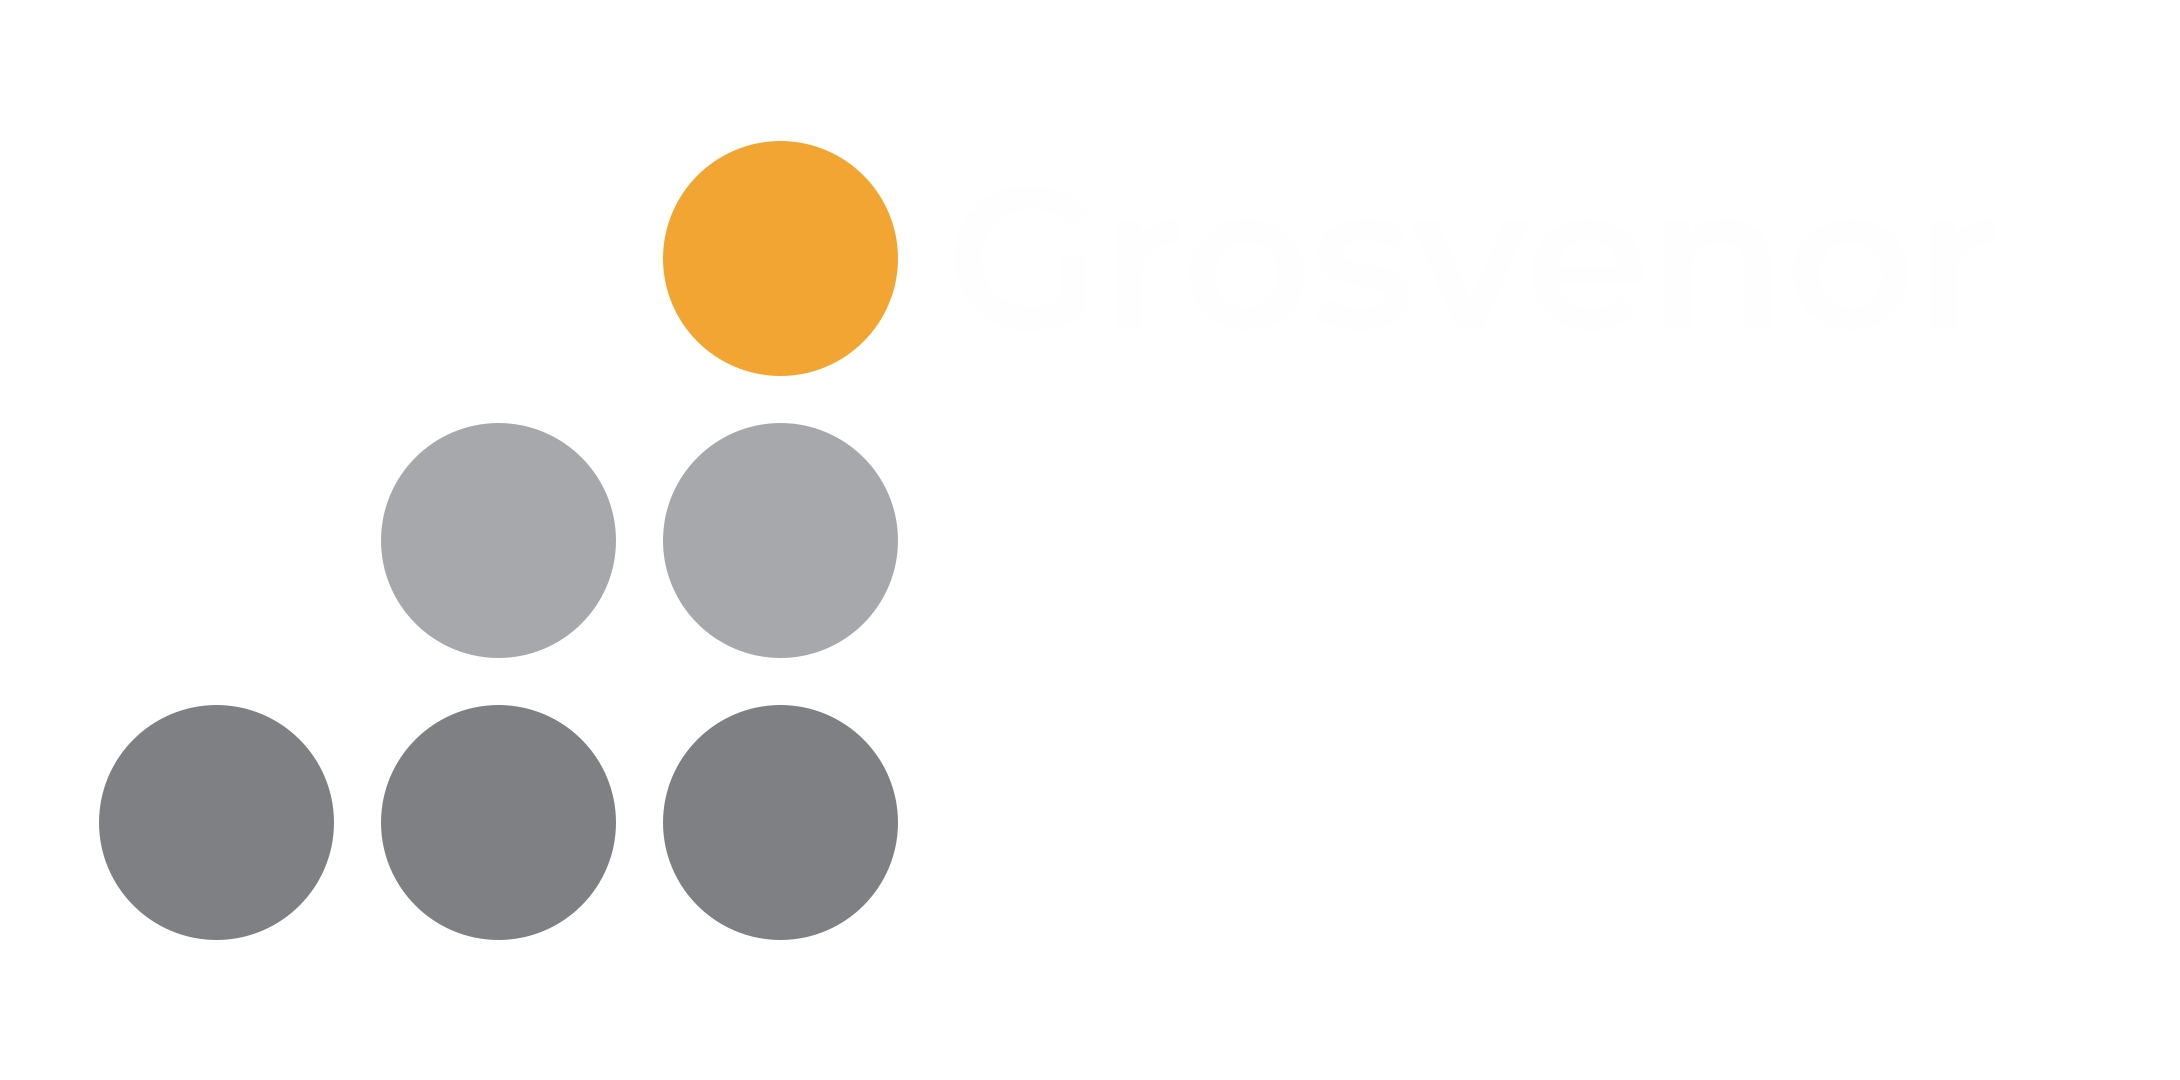 Grosvenor Gardens Healthcare